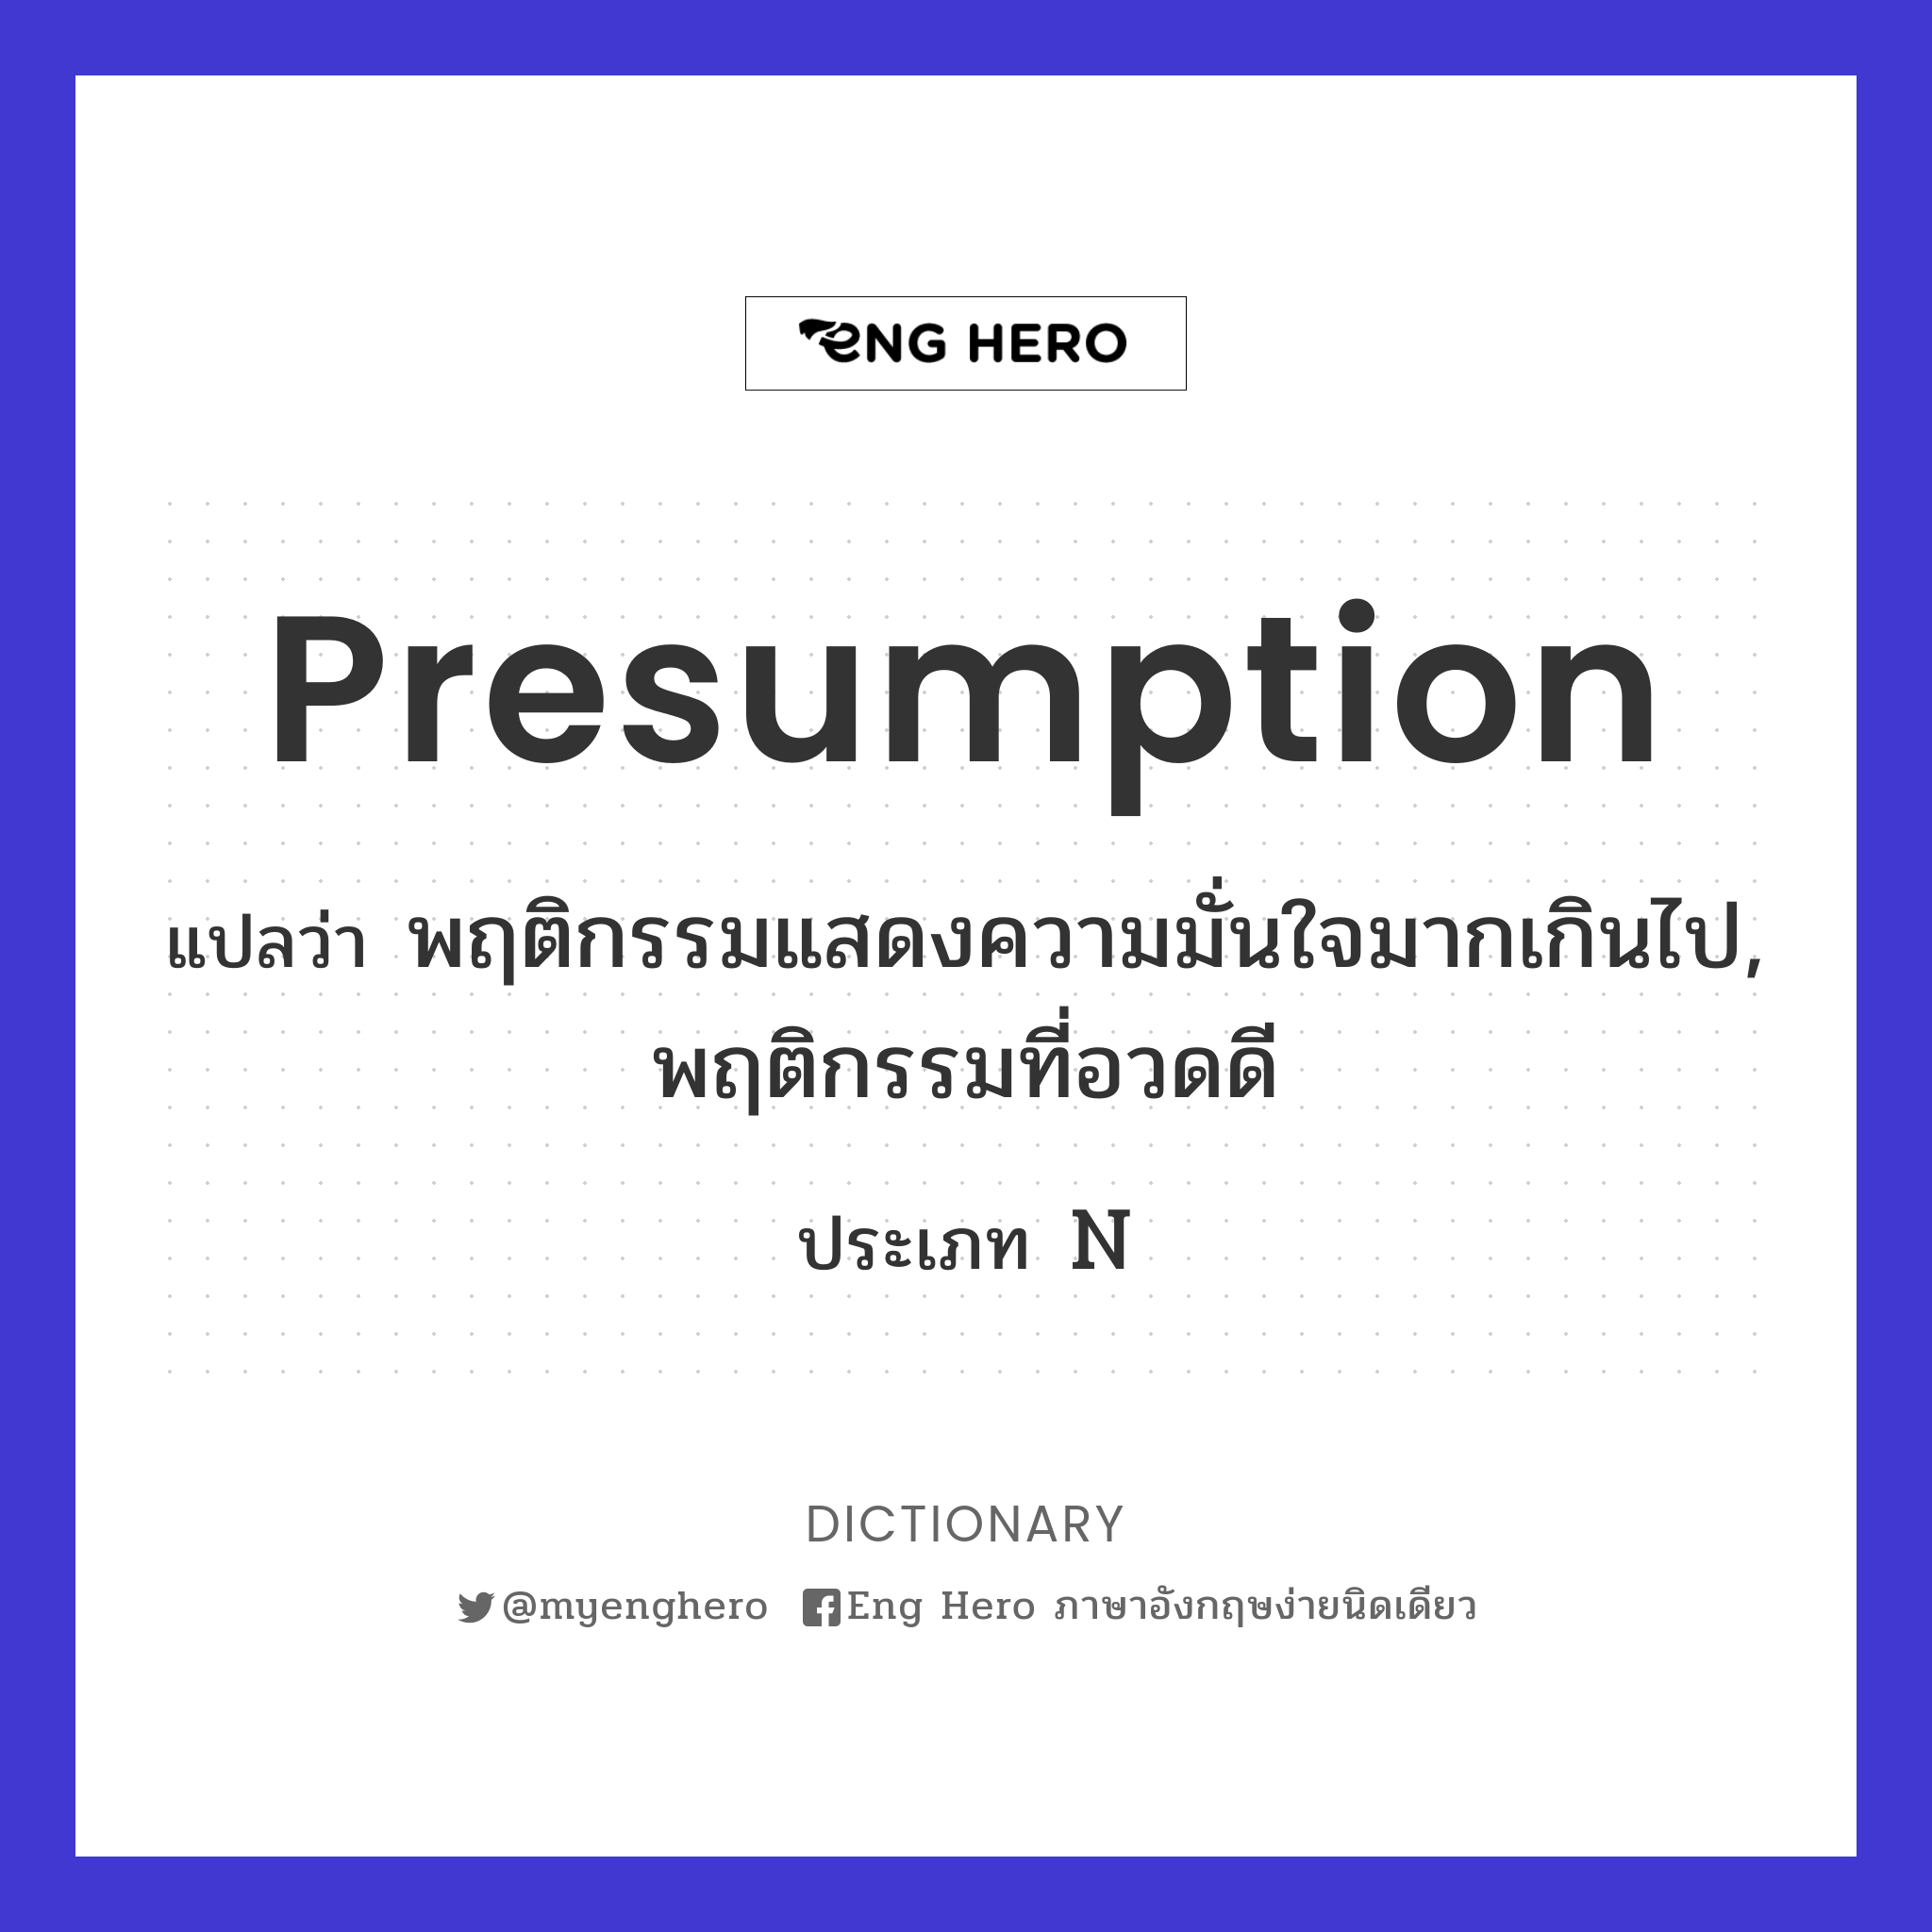 presumption